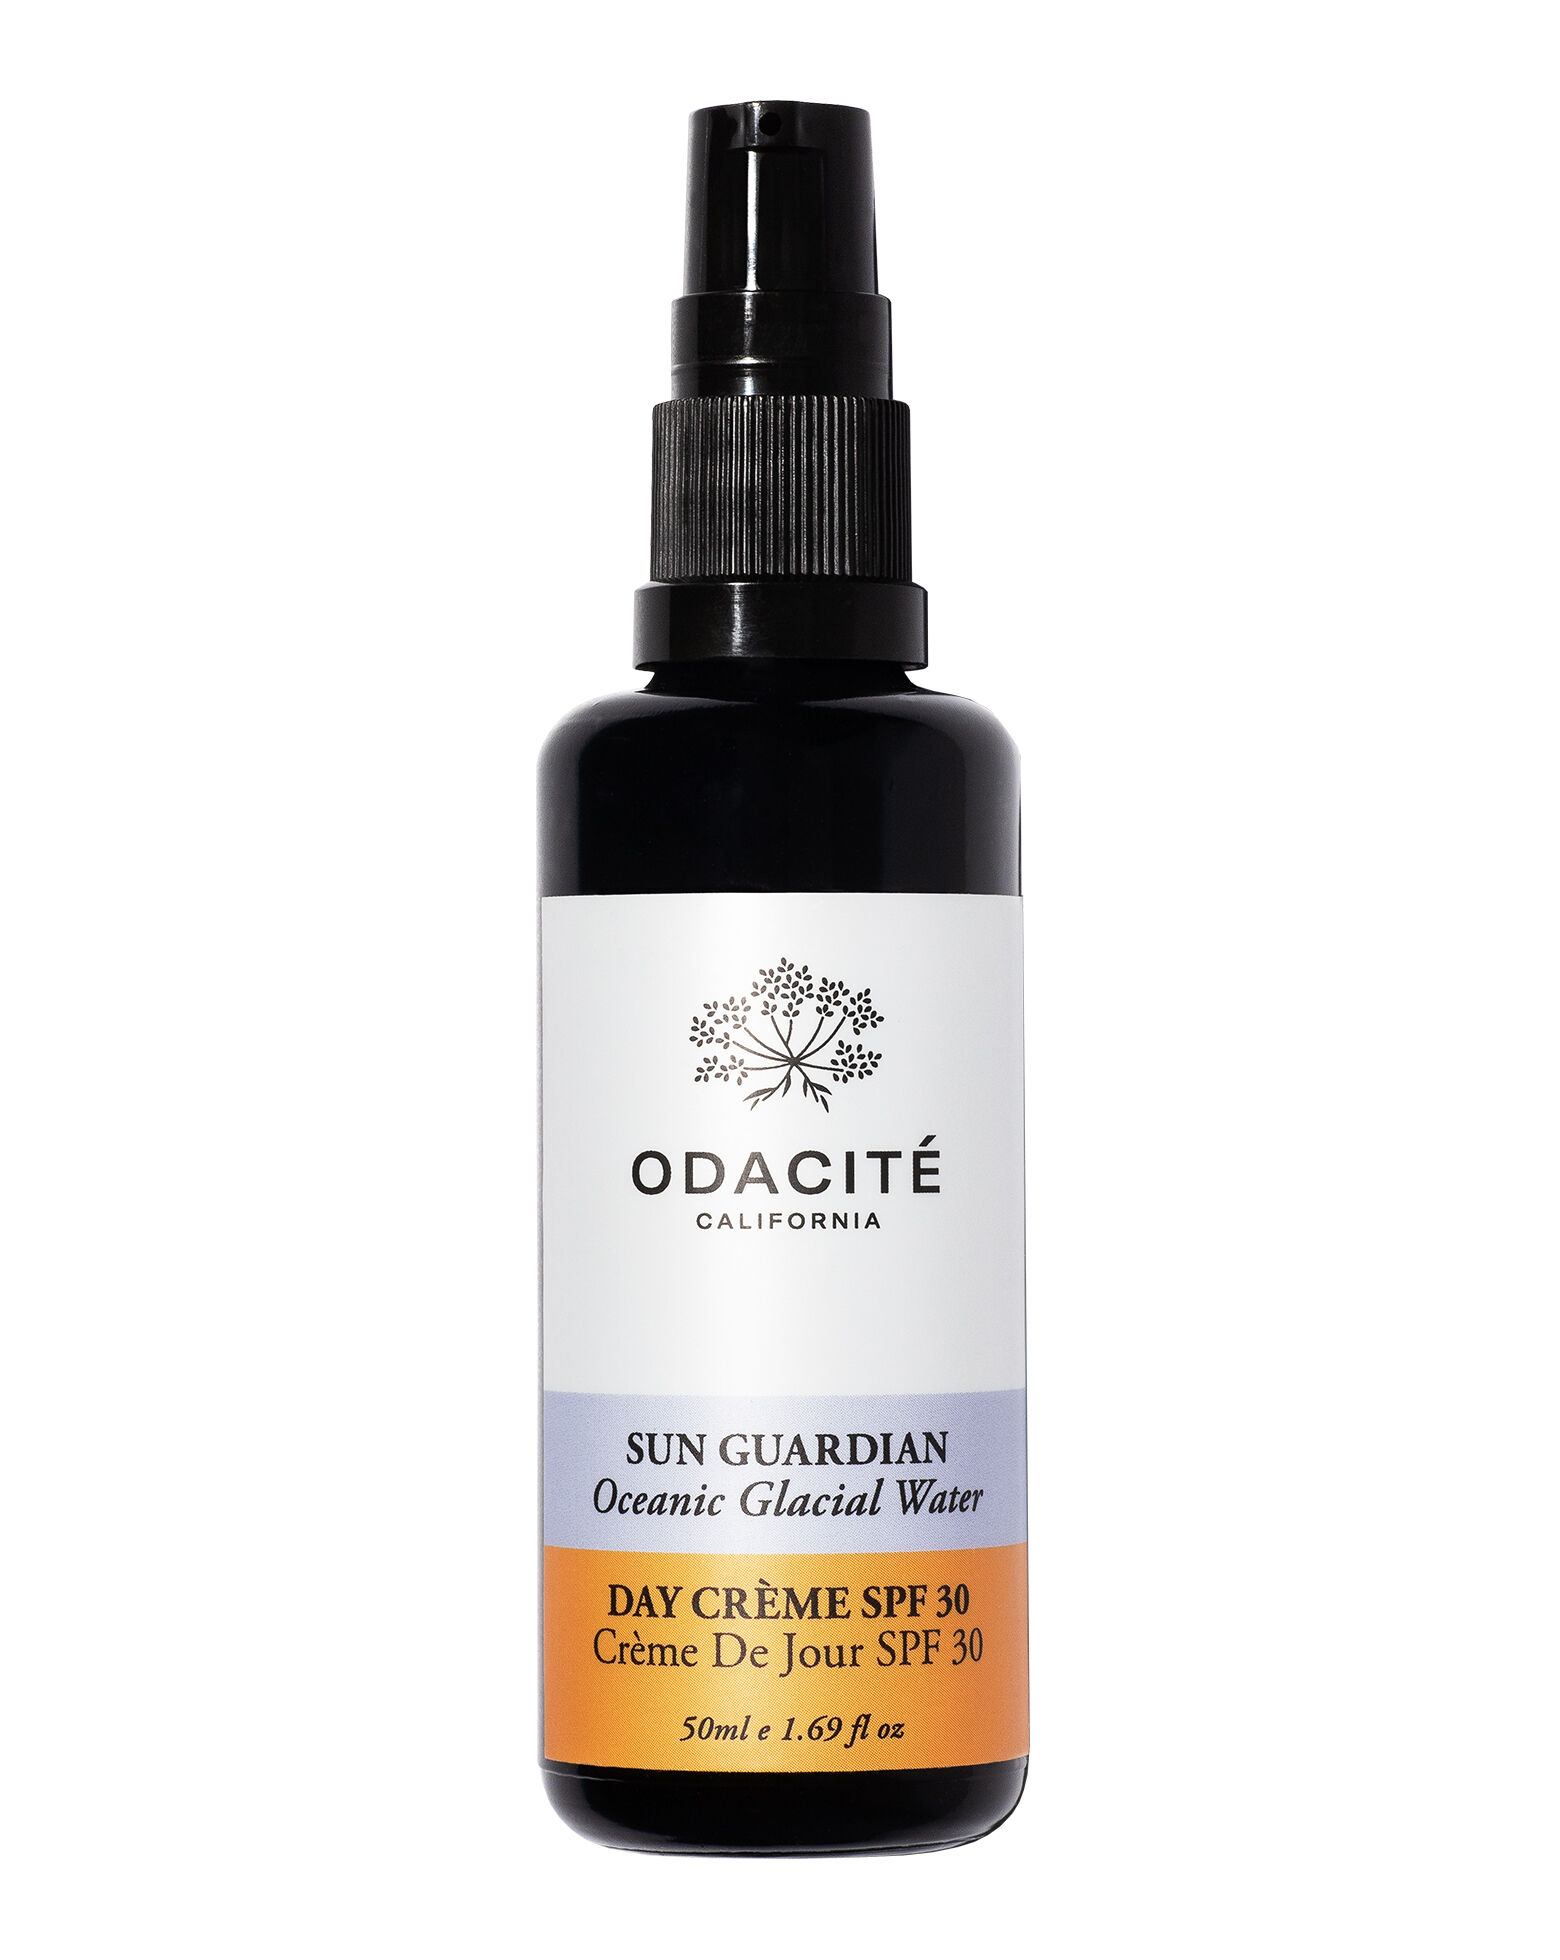 Odacite - Sun Guardian Oceanic Glacial Water Day Crème SPF 30